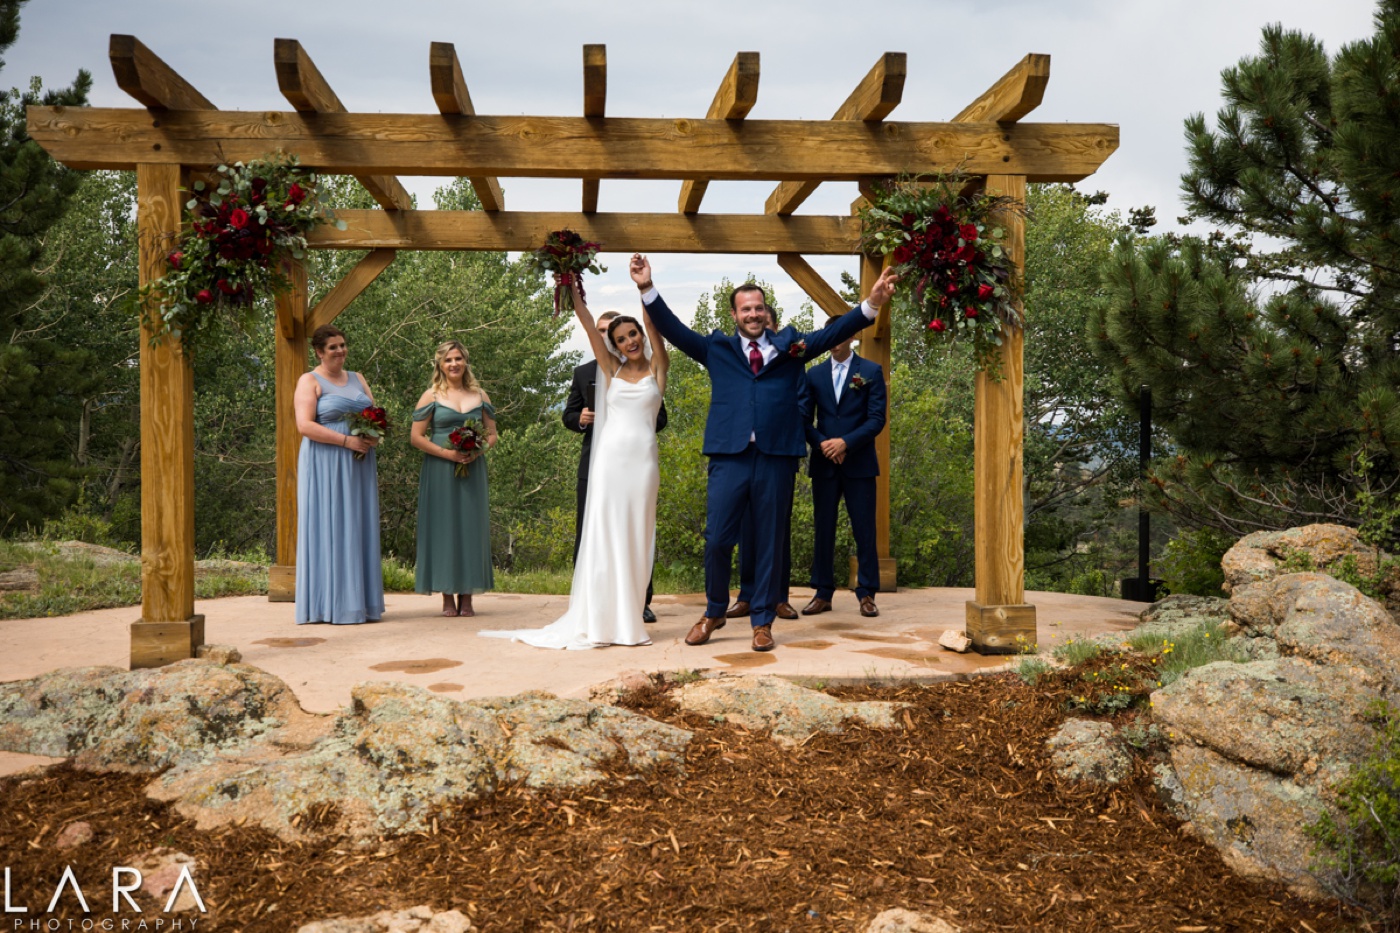 Rustic outdoor wedding ceremony at Taharaa Mountain Lodge, Rustic Wedding in July, Outdoor Summer Wedding in Colorado 